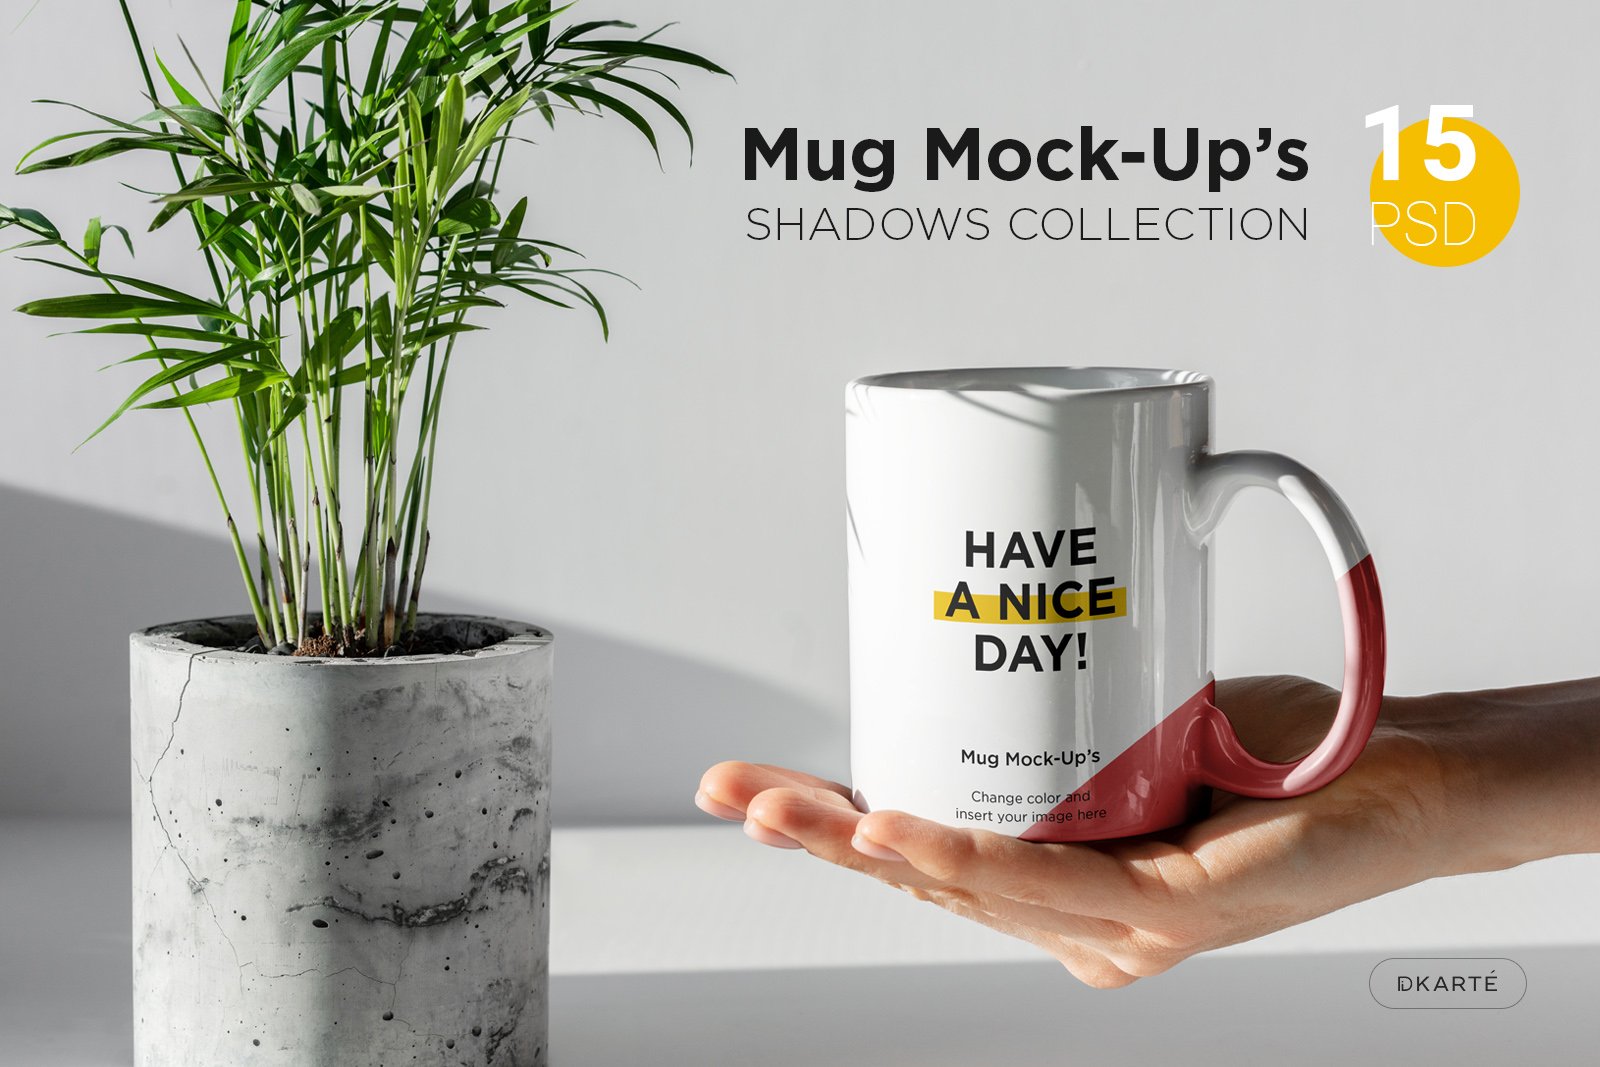 Mug Mock-Up's Shadows Collection cover image.